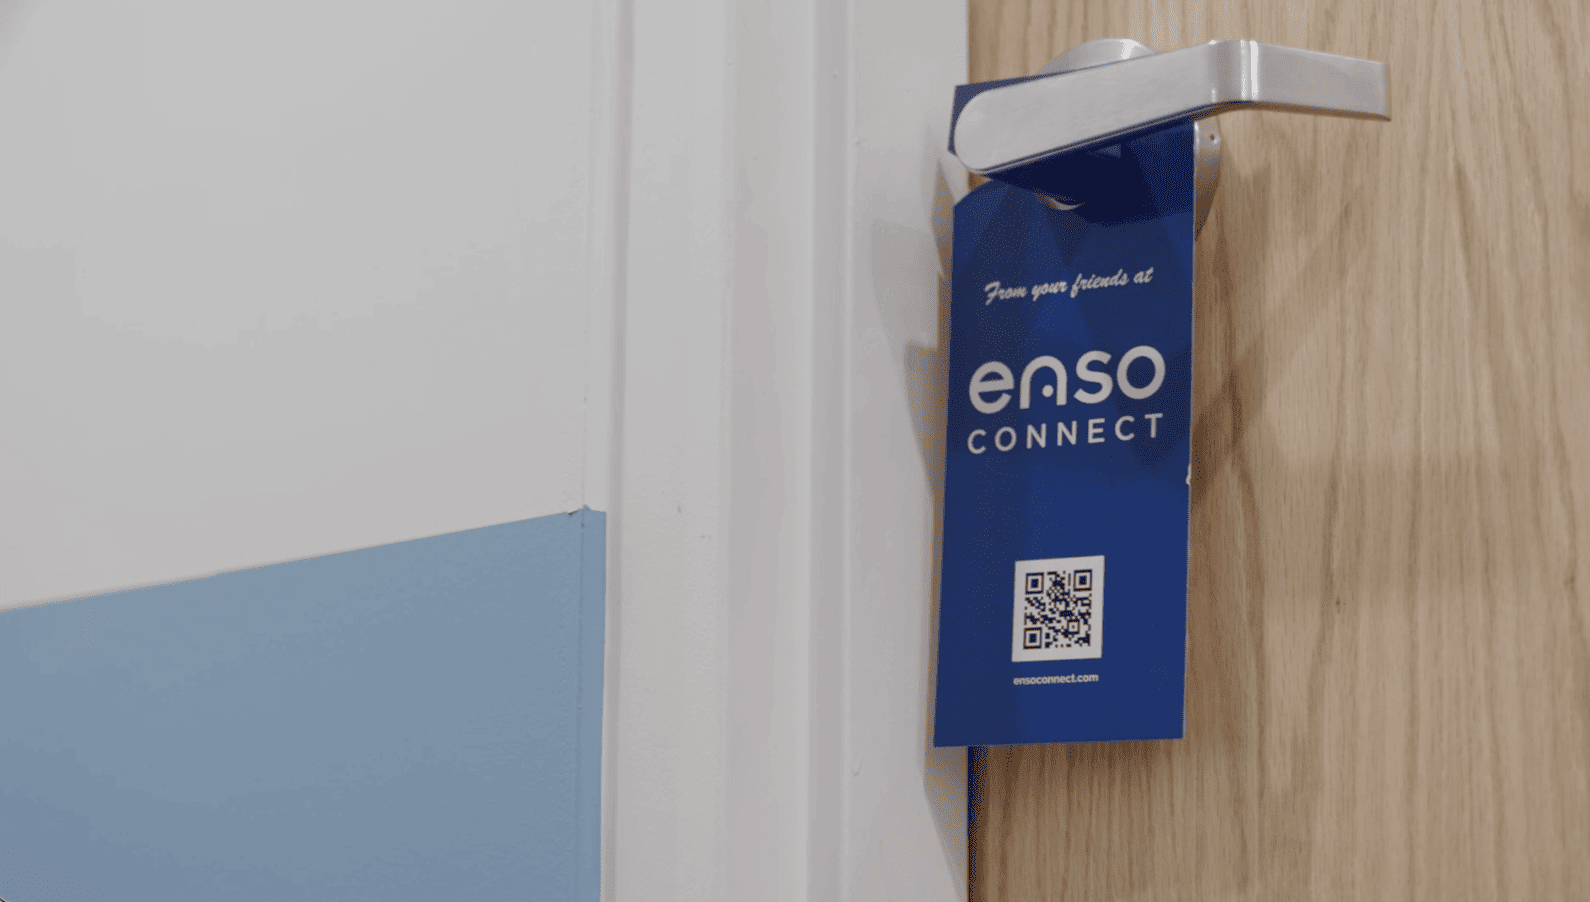 Enso connected door